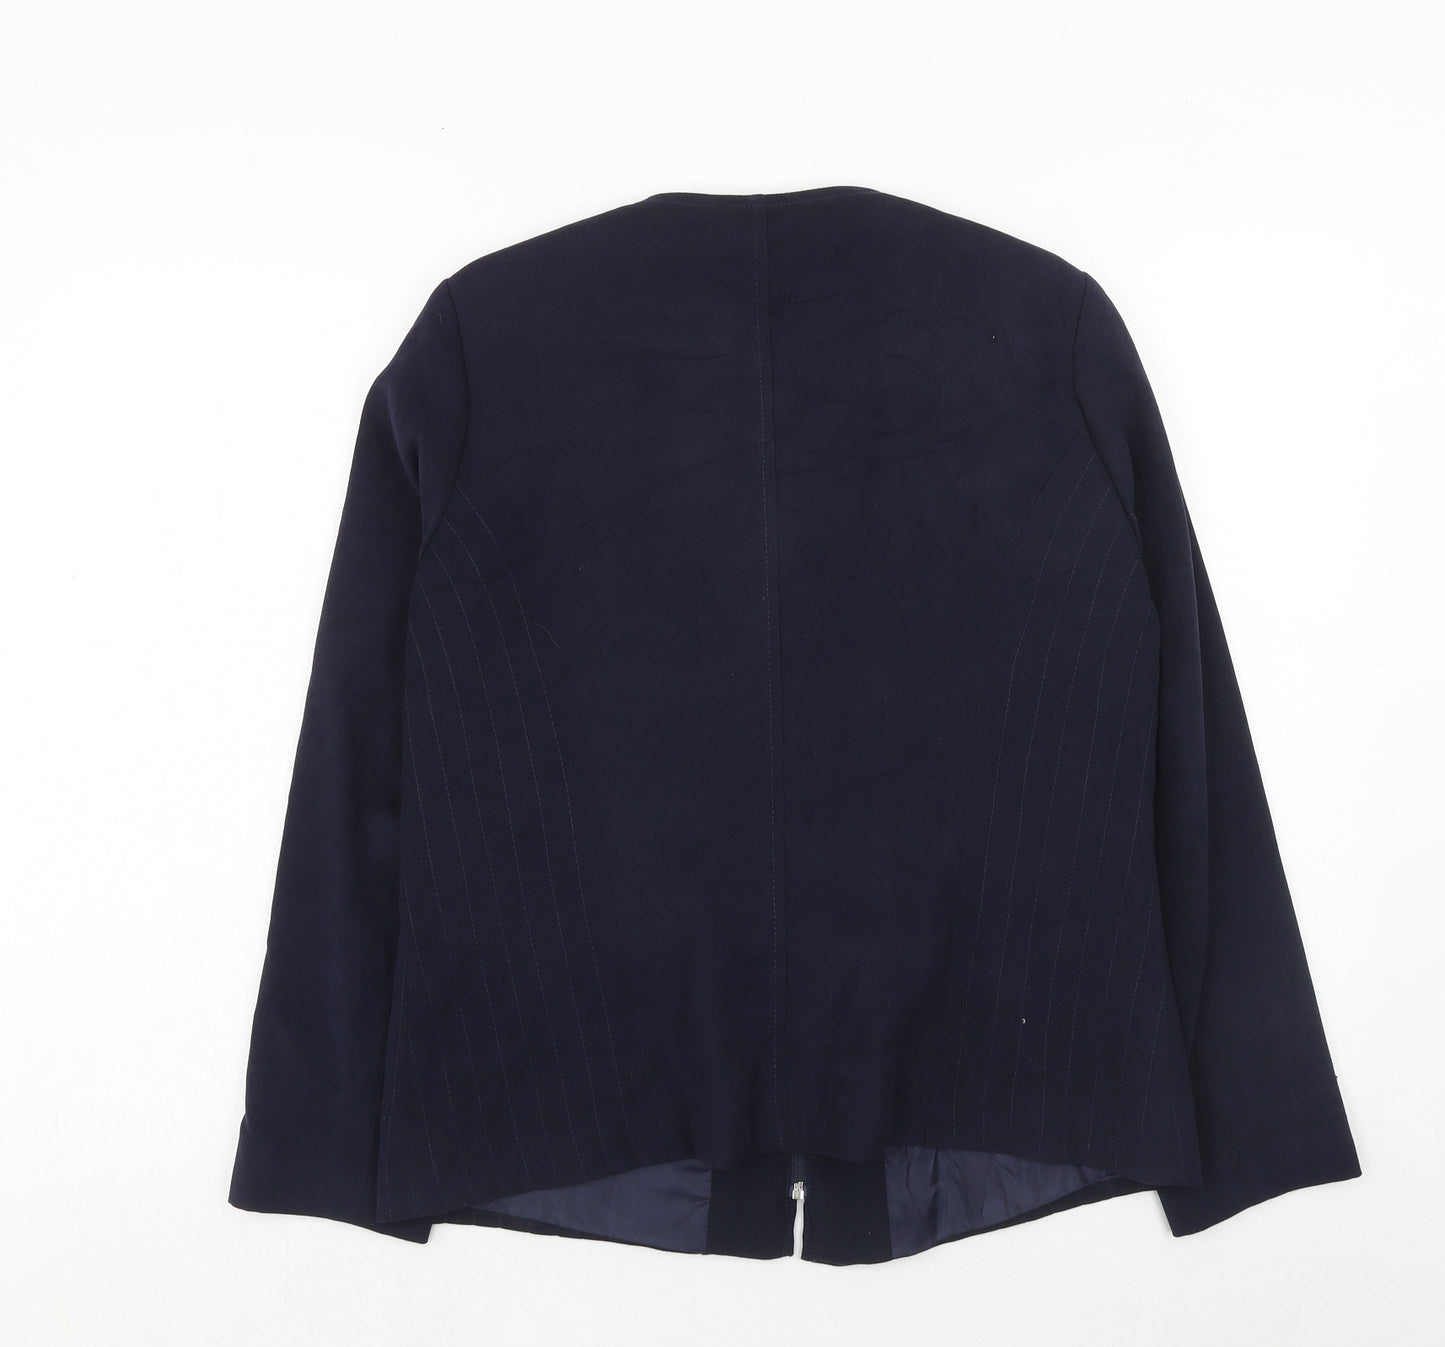 Bonmarché Womens Blue Jacket Size 14 Zip